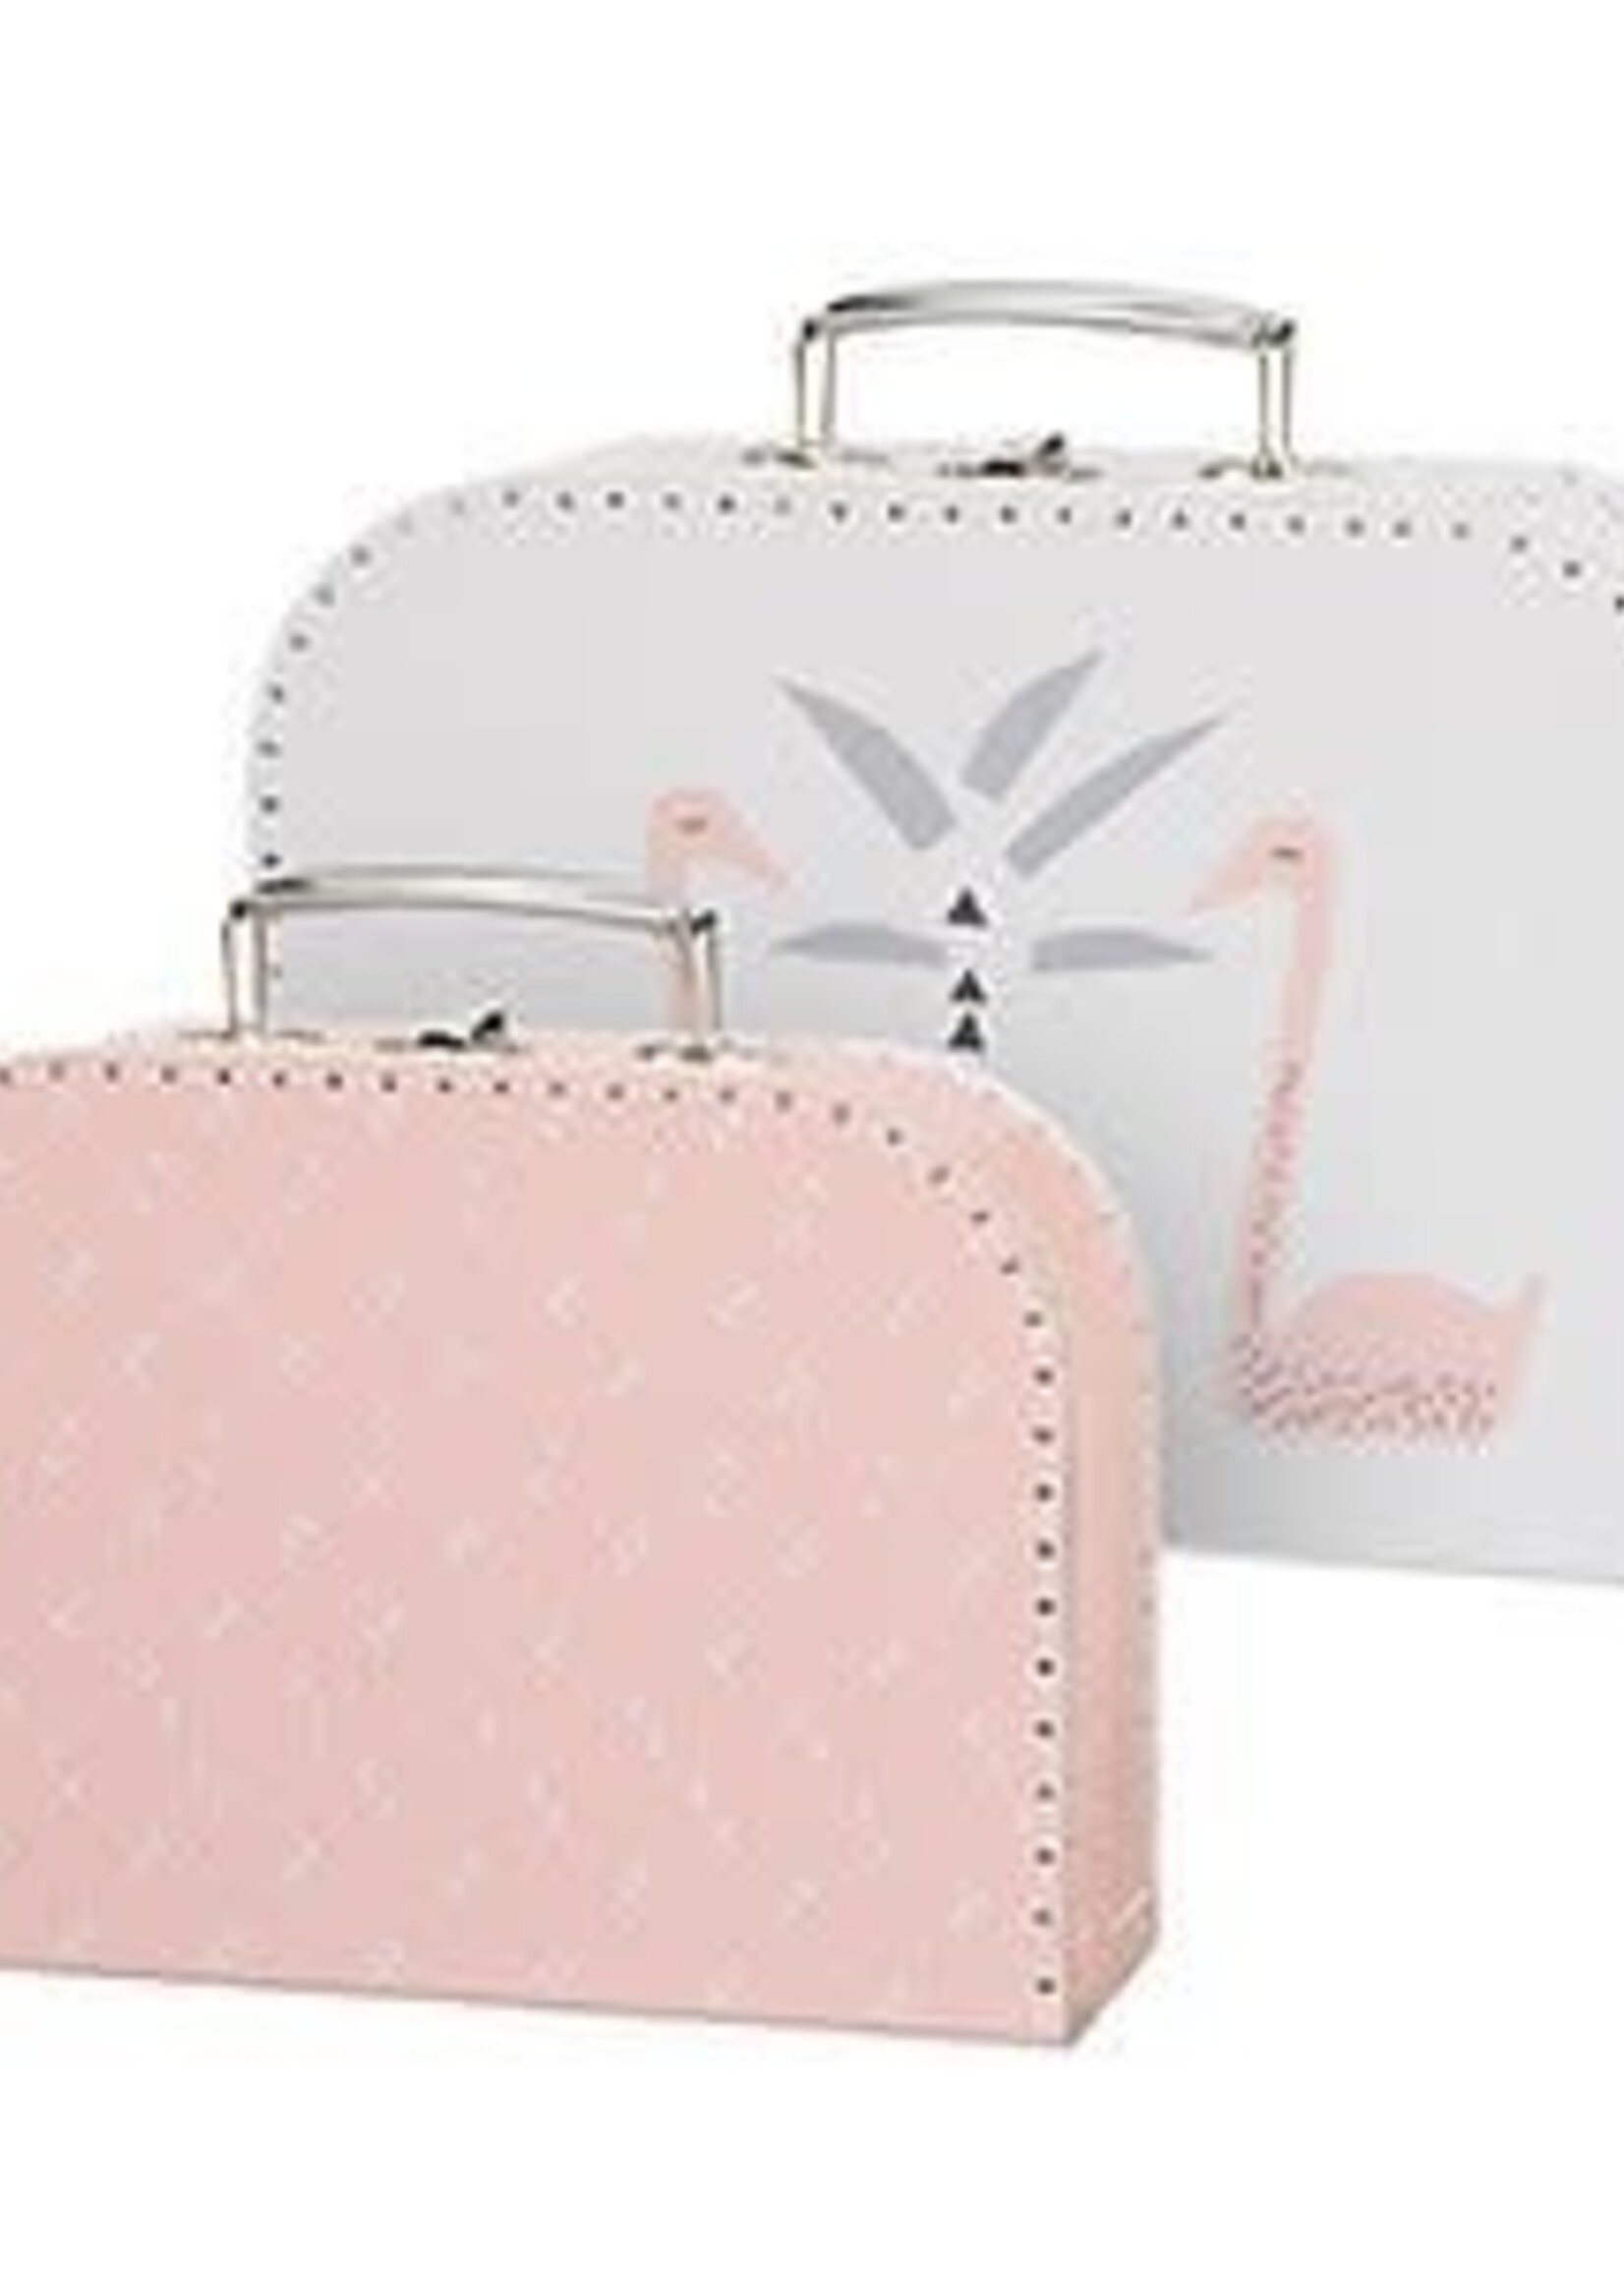 Fresk Fresk Koffer roze klein